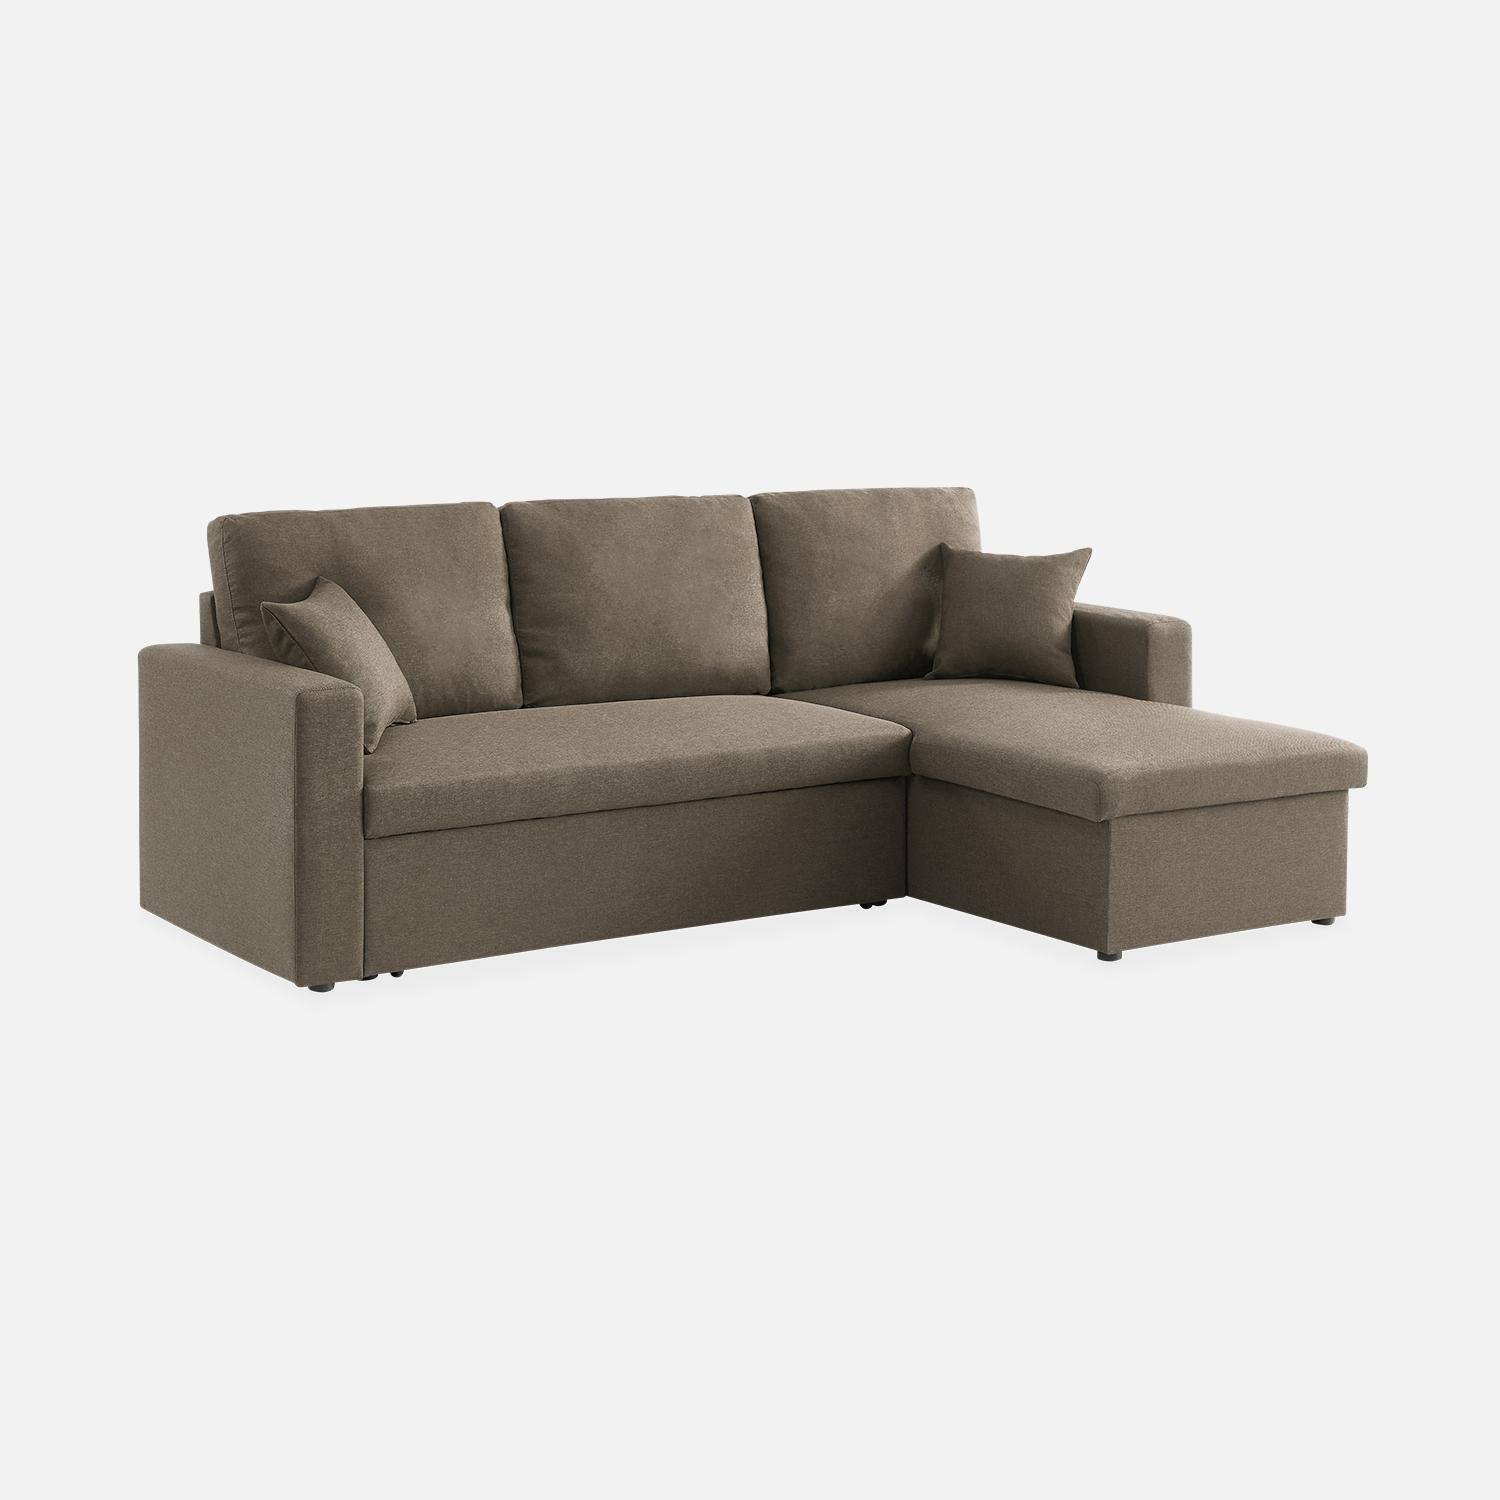 3-seater reversible brown corner sofa bed with storage box, brown, L219xD81xH68cm, IDA,sweeek,Photo5